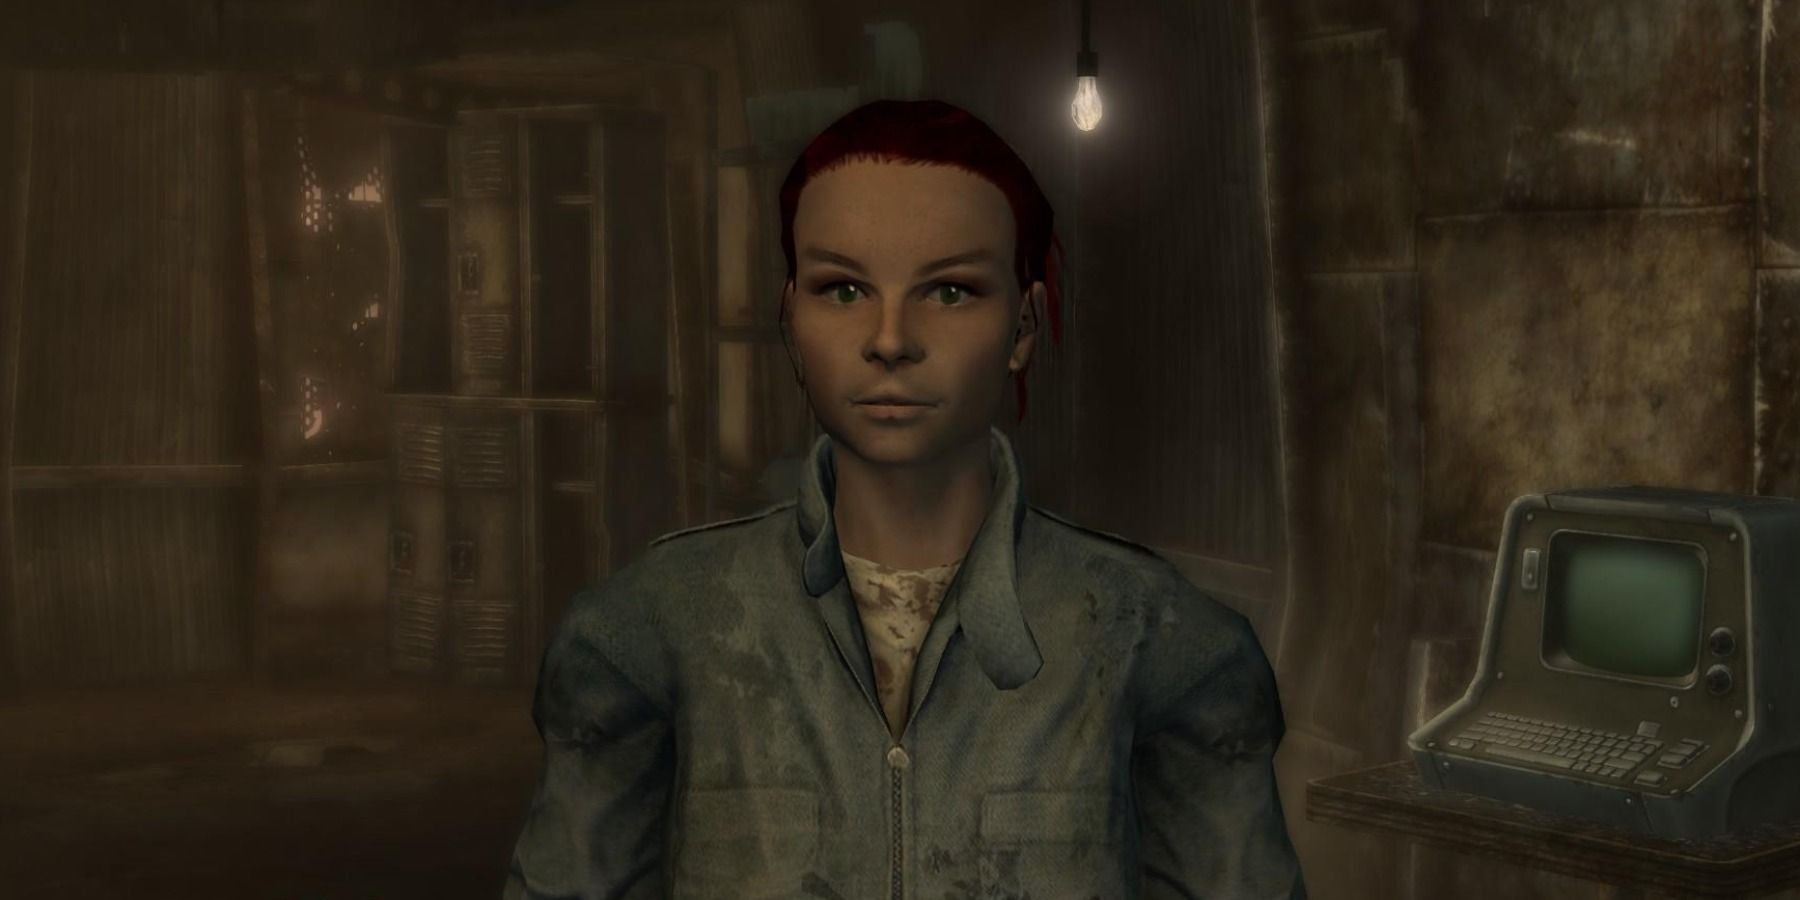 Moira Brown in Fallout 3